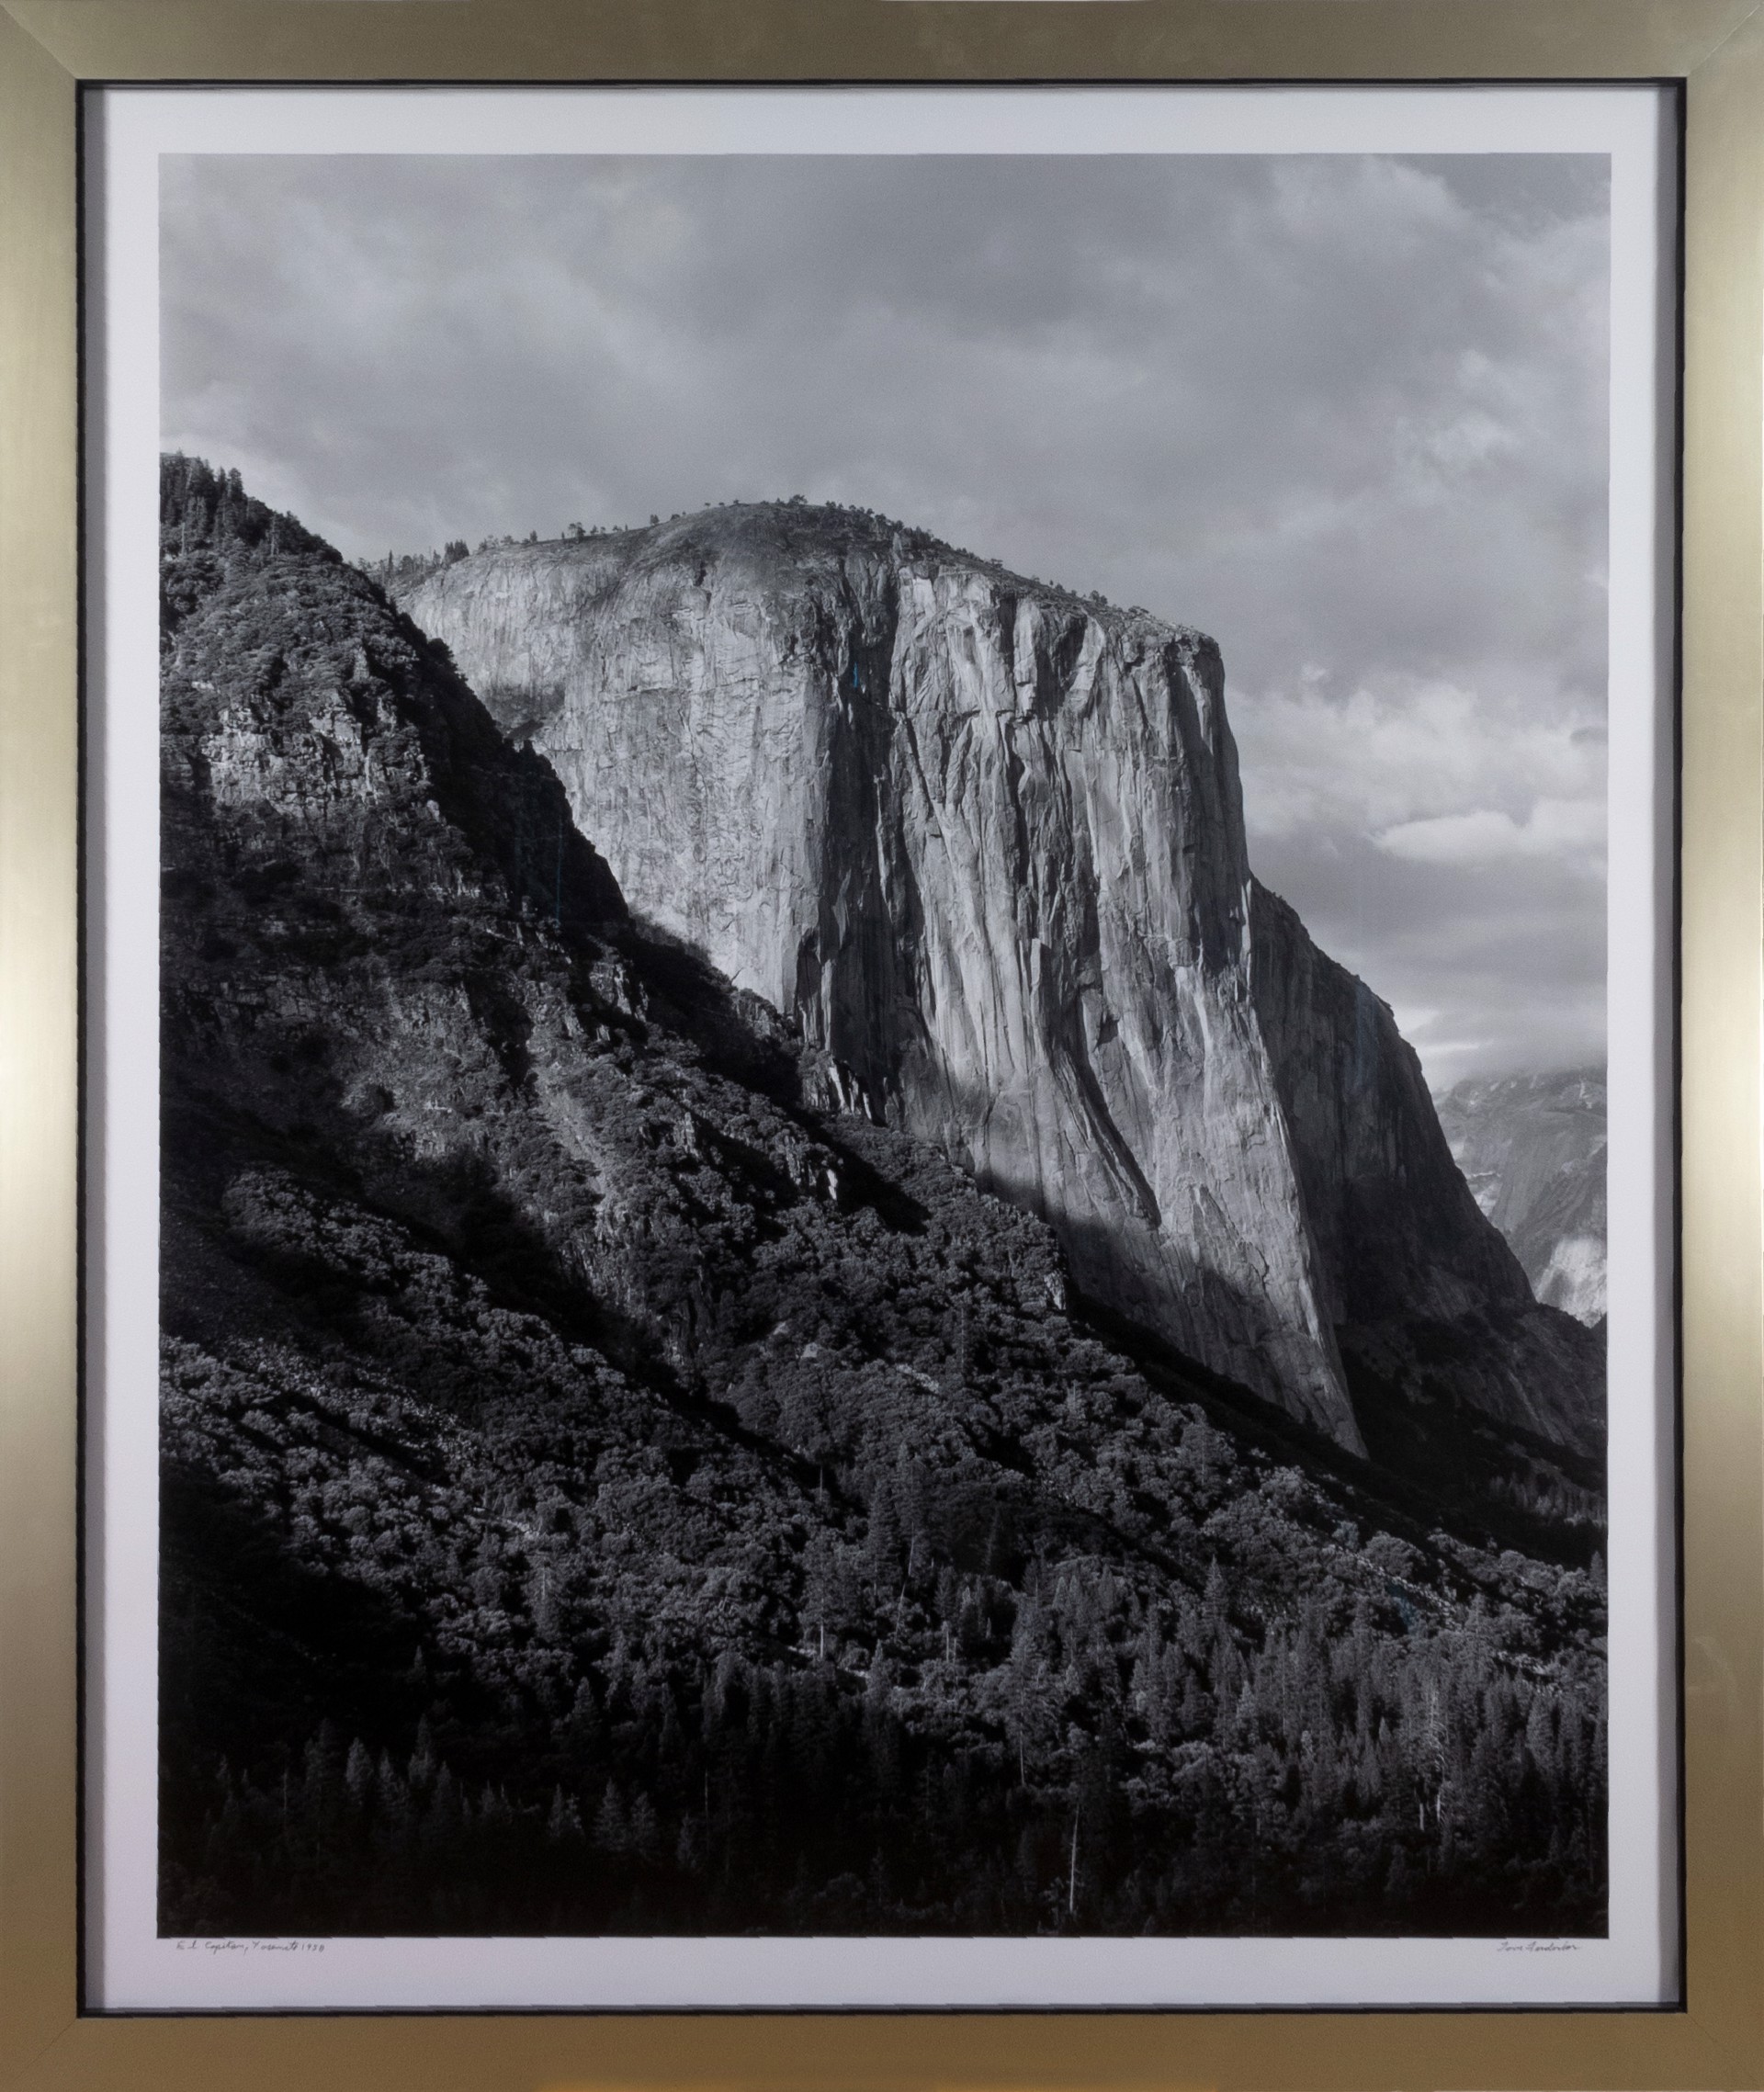 El Capitan (Yosemite National Park, CA) by Thomas Ferderbar